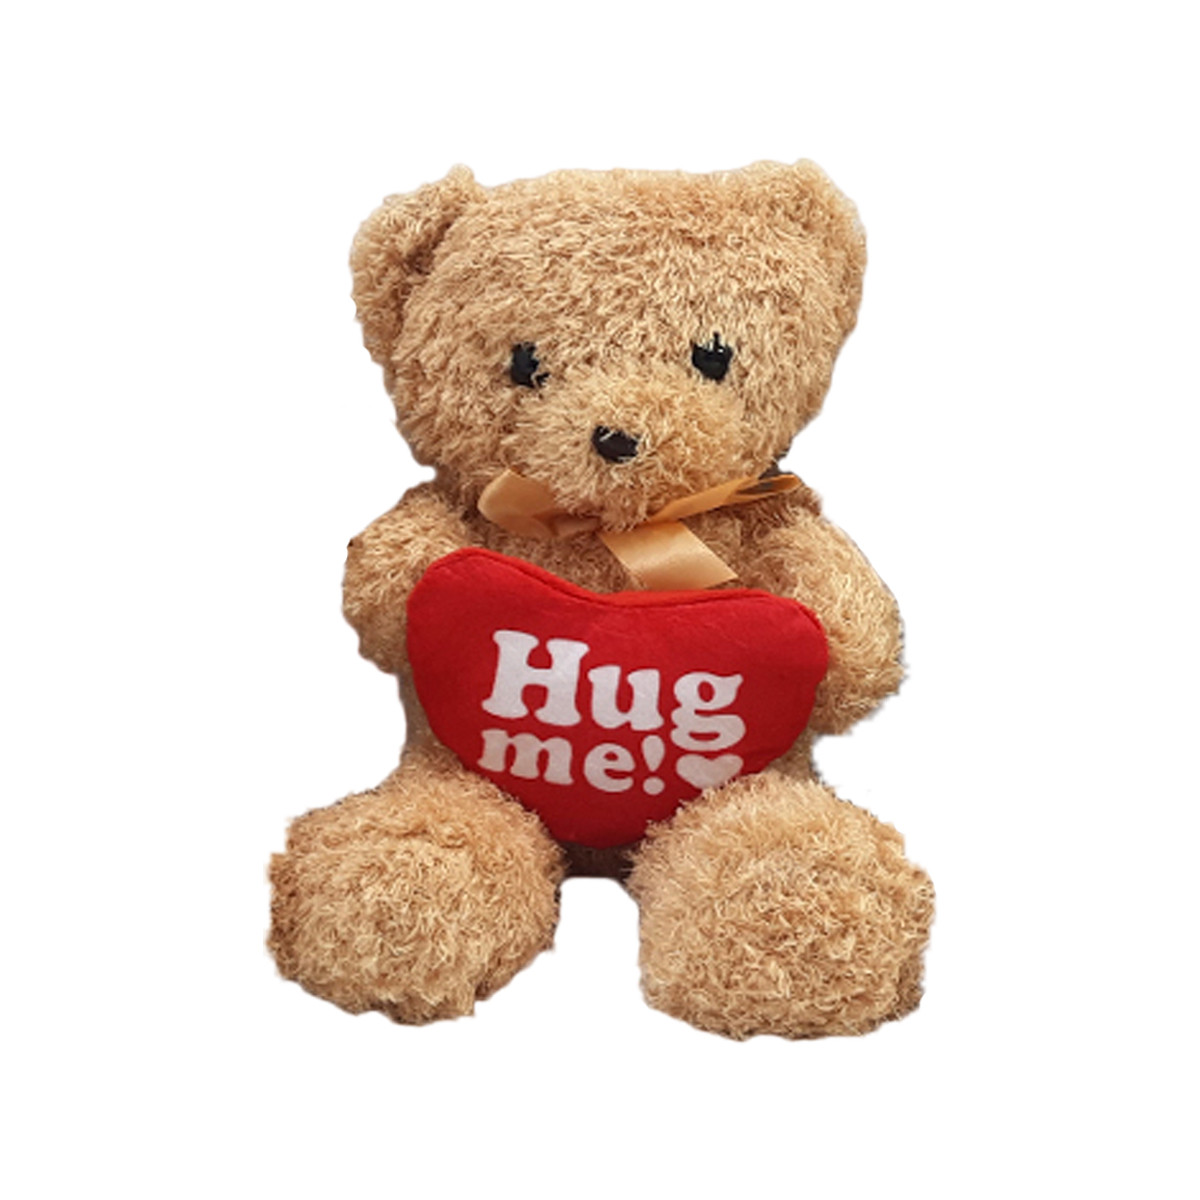 М'яка іграшка "Ведмедик Hug my" коричнева 25 см.